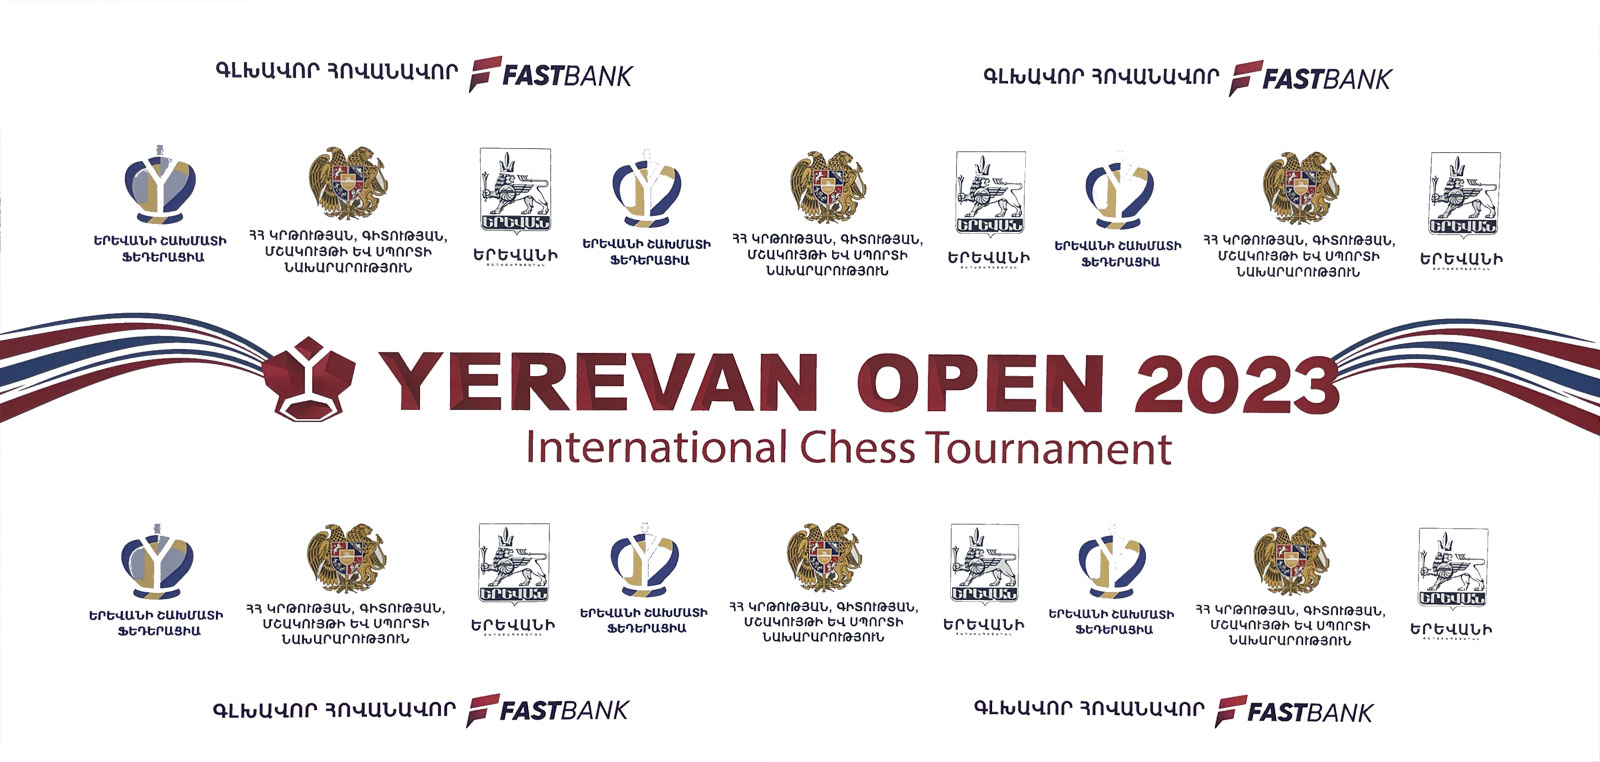 5th YEREVAN OPEN International Chess Tournament